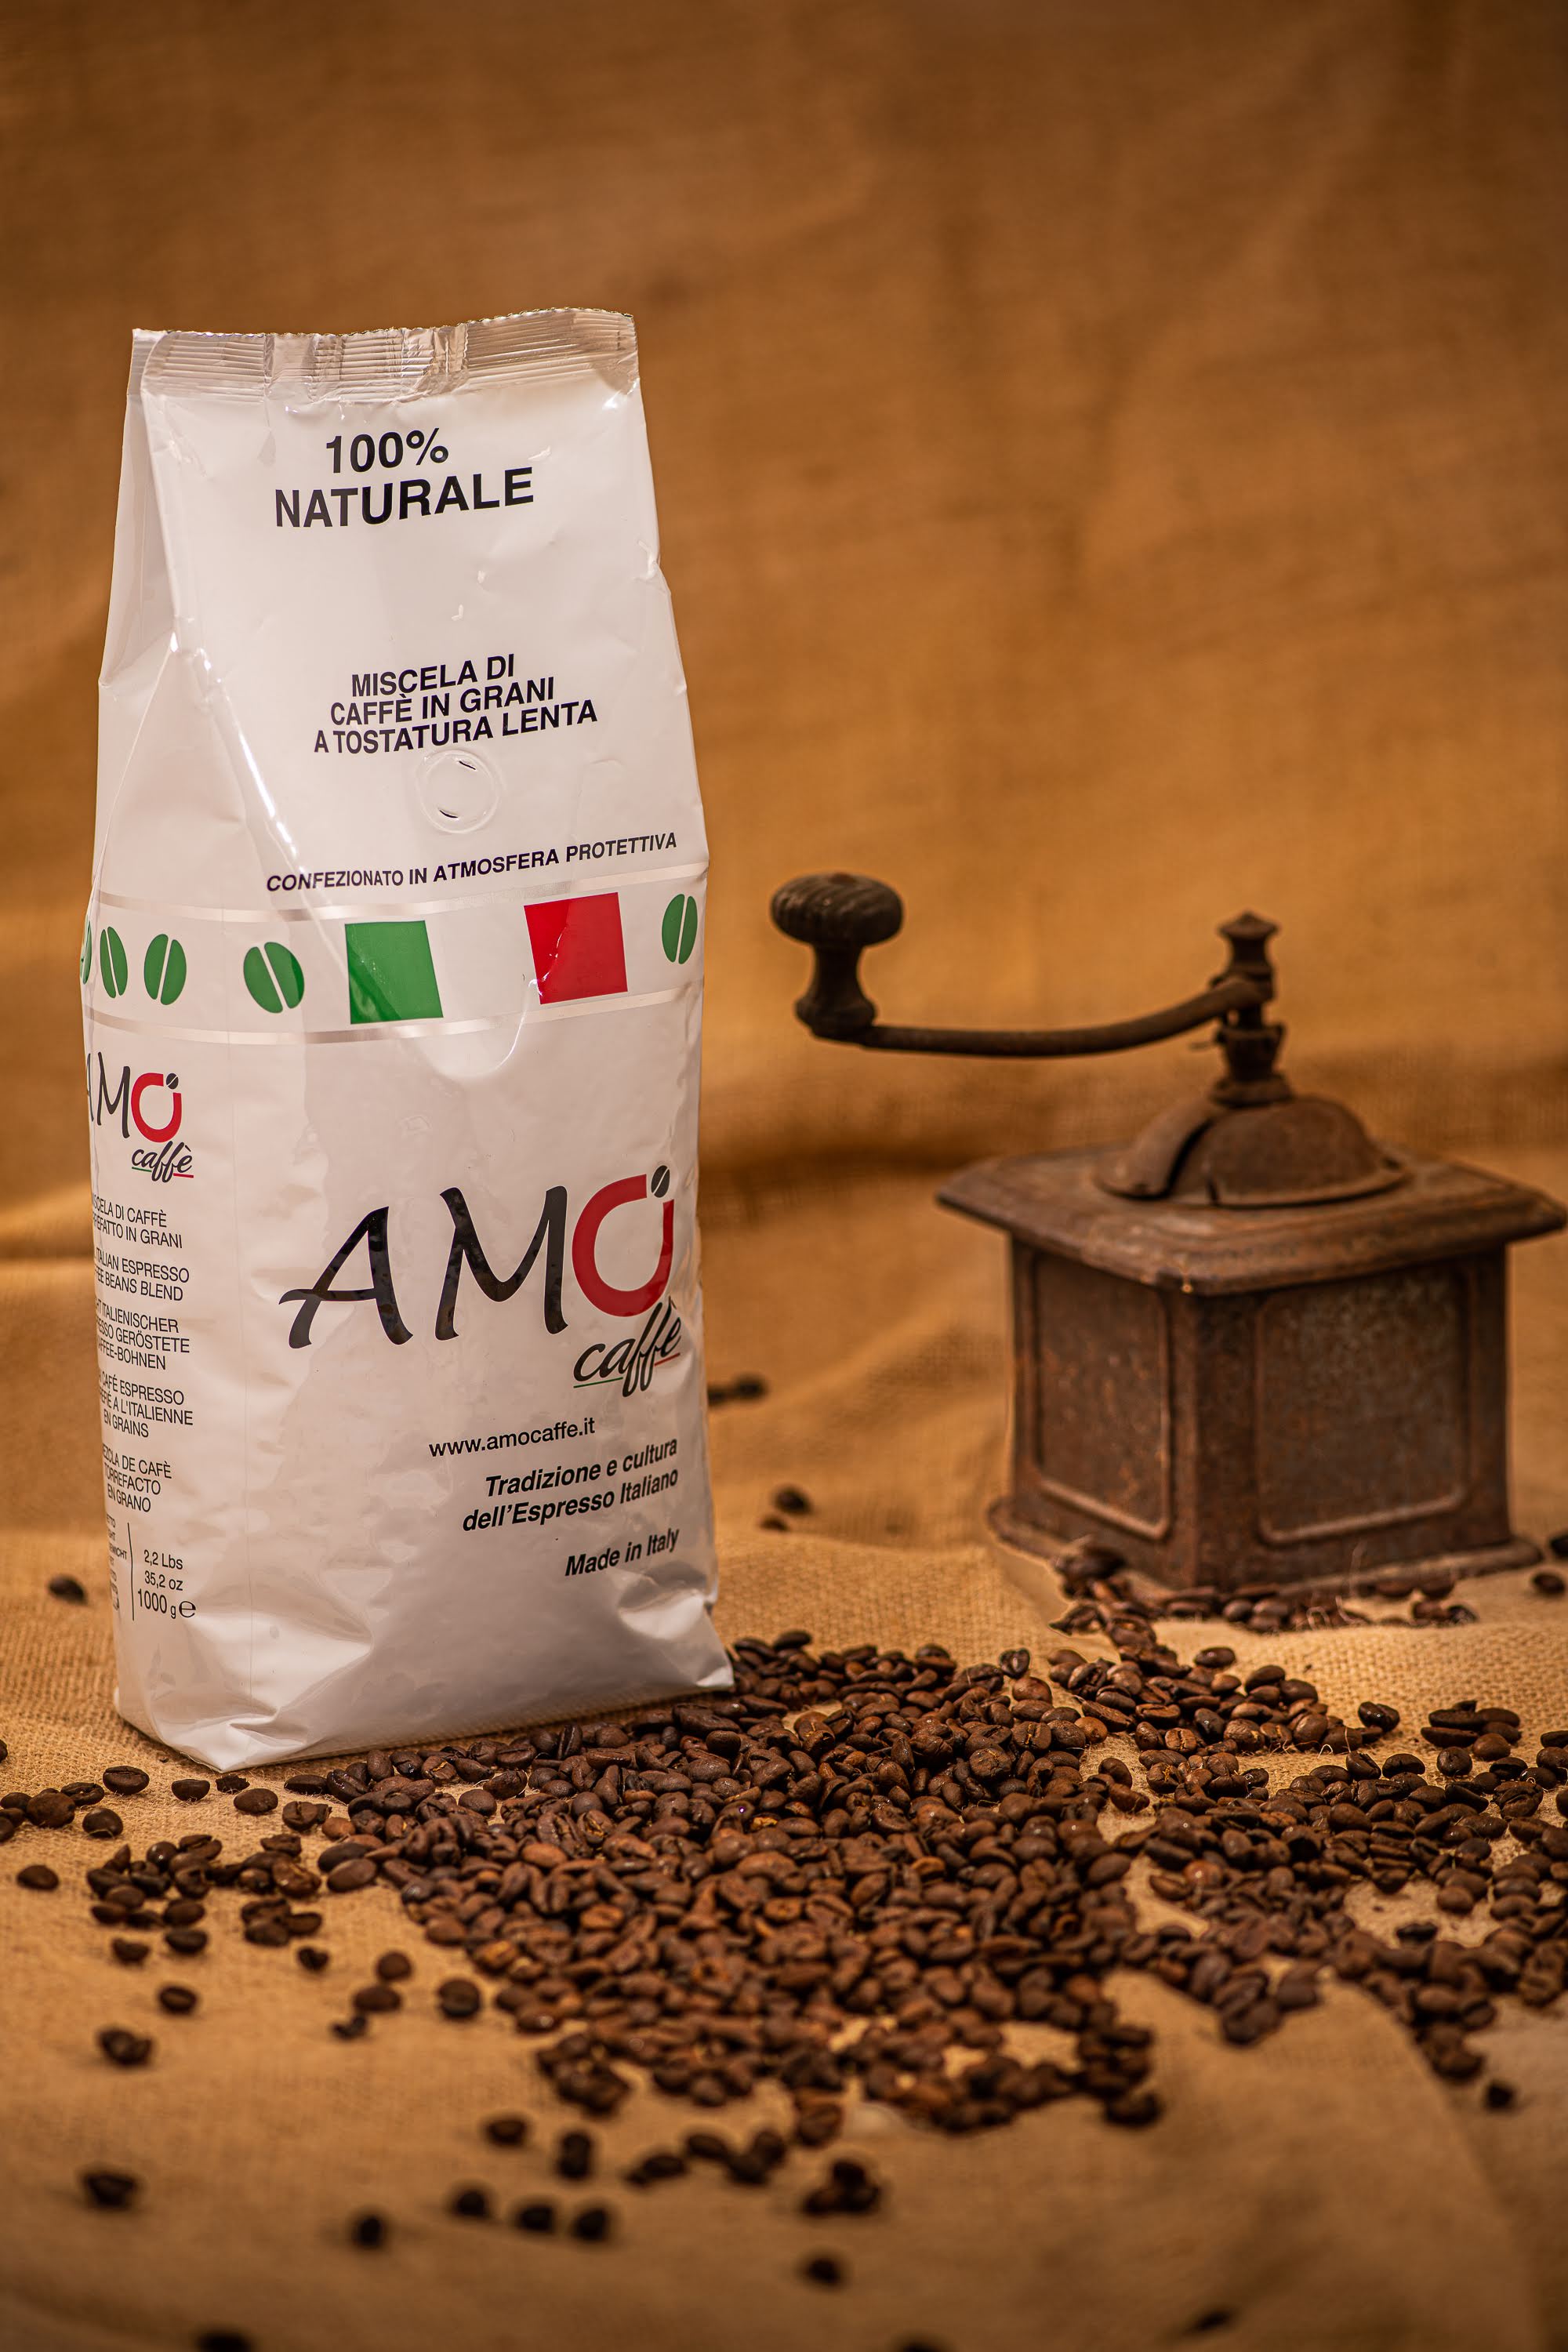 AMO CAFFE MISCELA DEK 100% ARABICA- MISCELA DI CAFFE IN GRANI A TOSTATURA LENTA